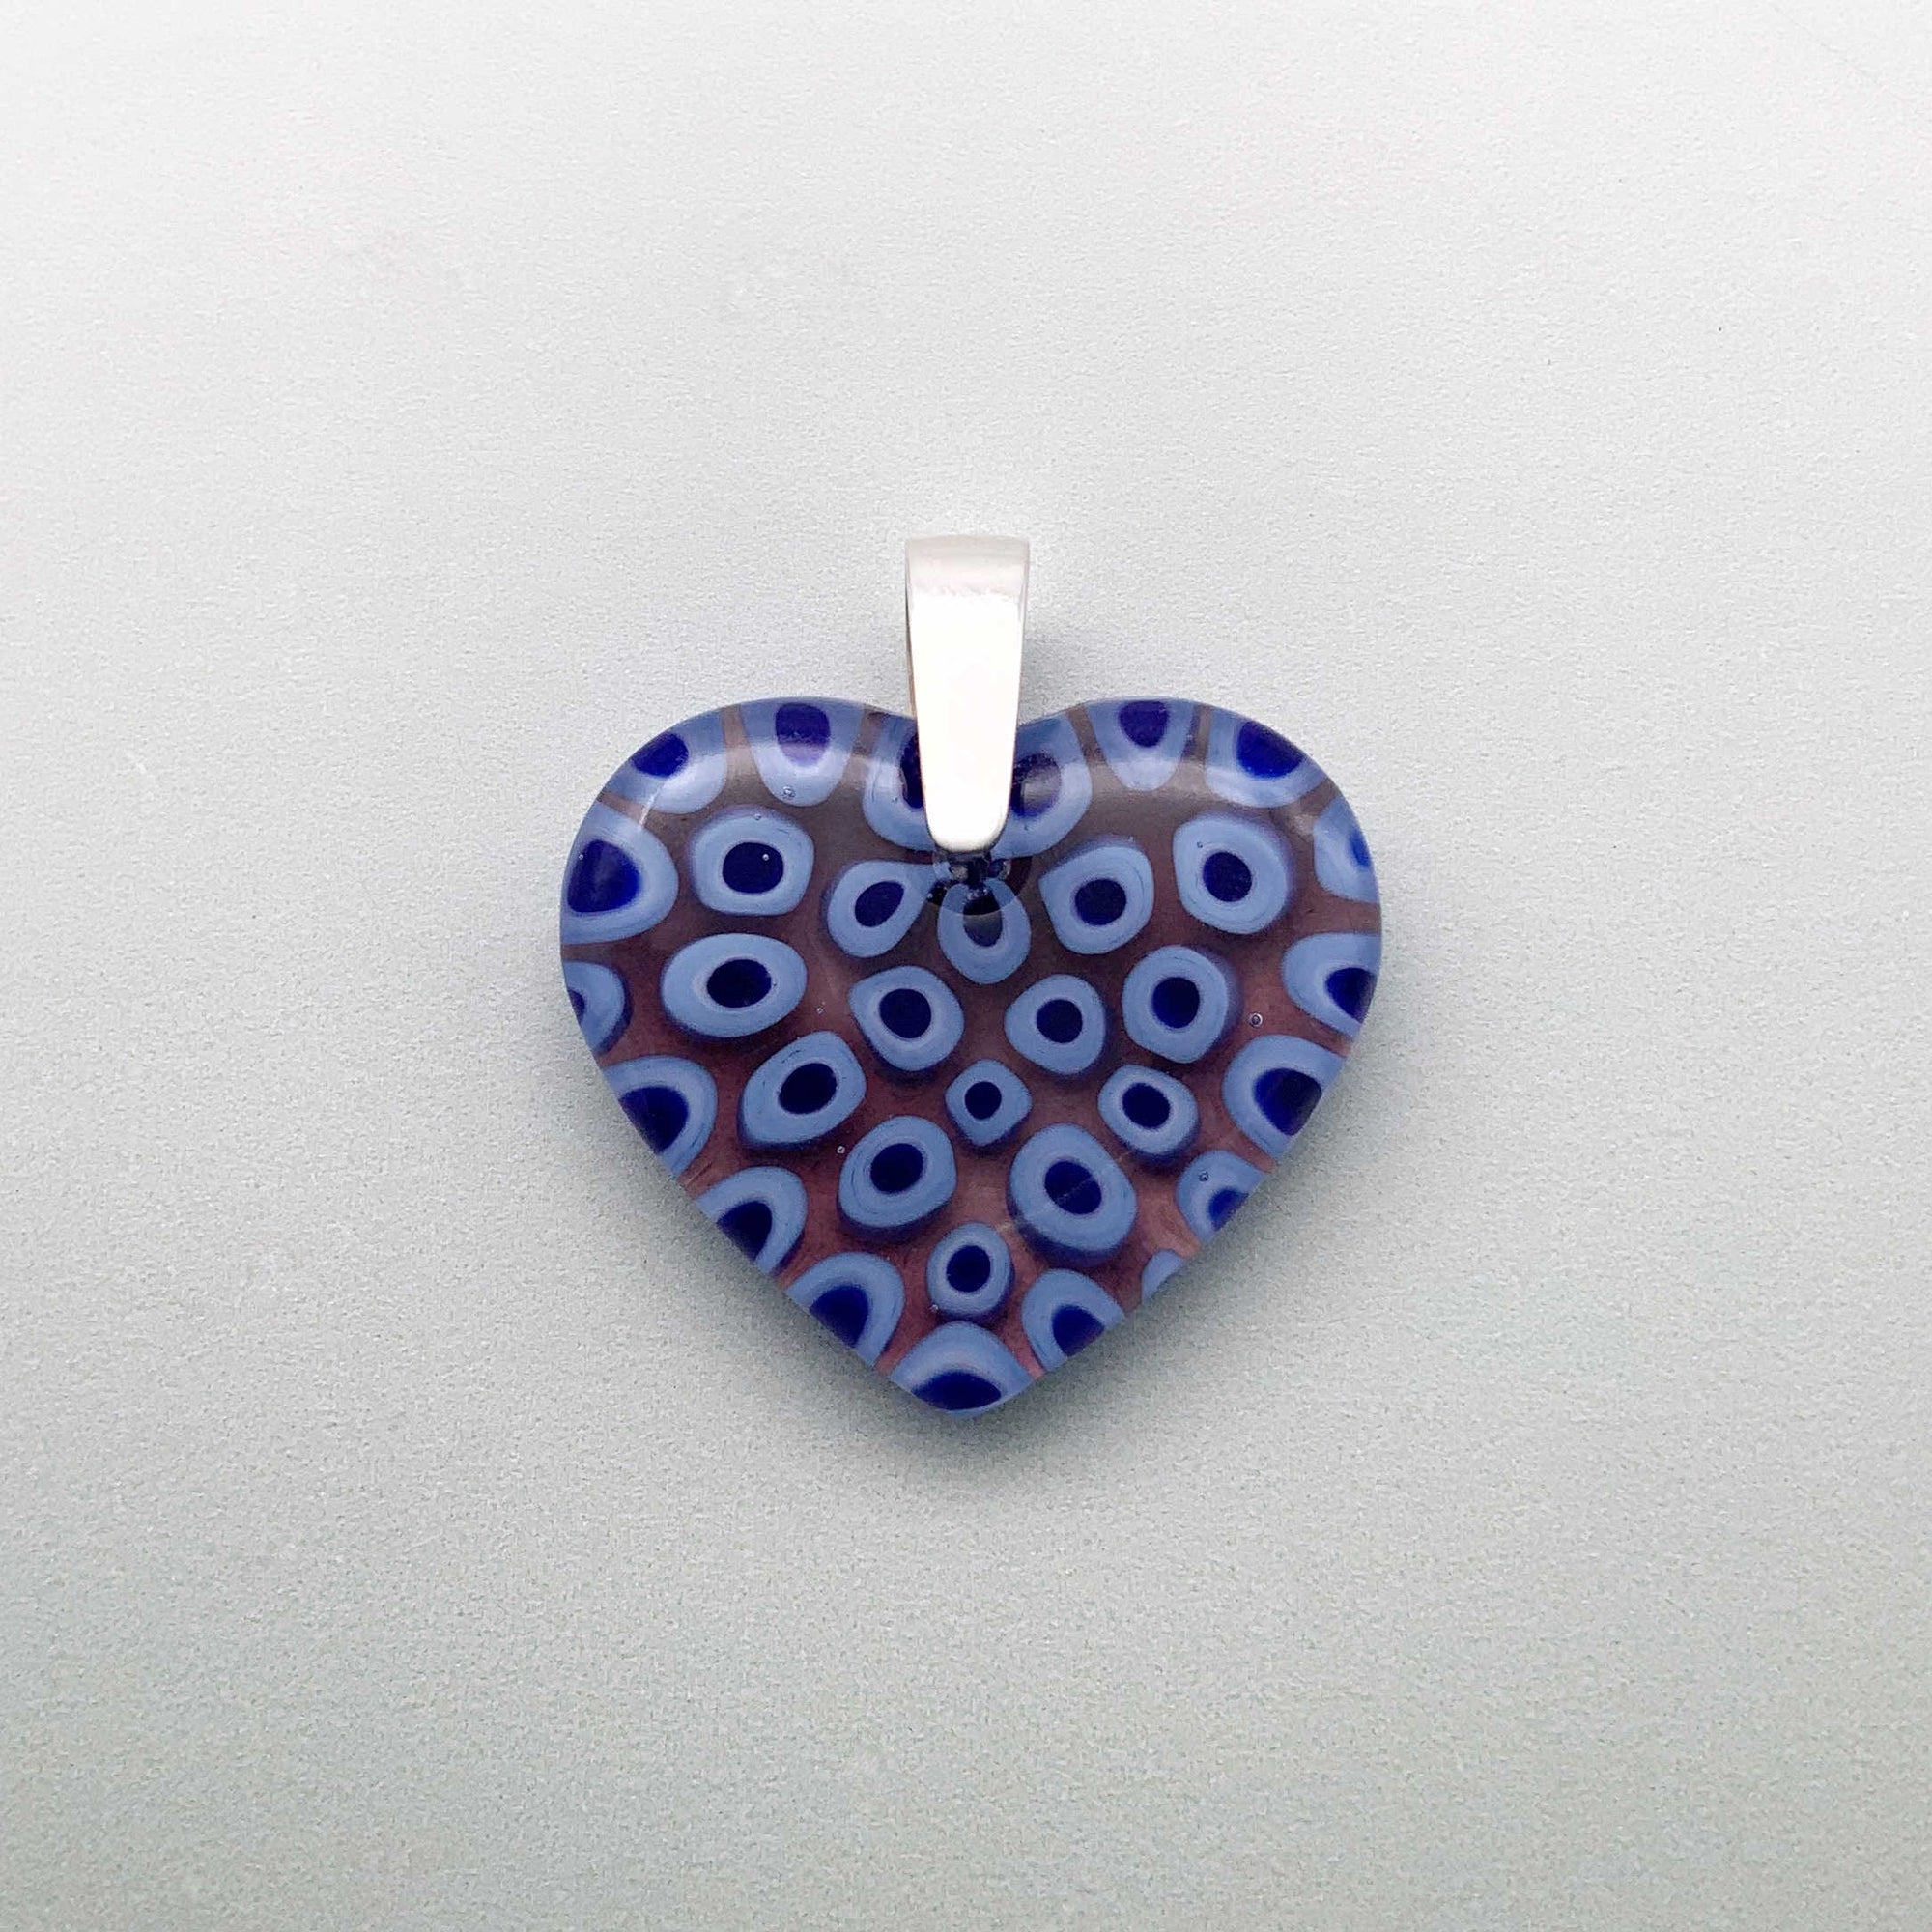 Blue caviar small glass pendant with a plum undertone